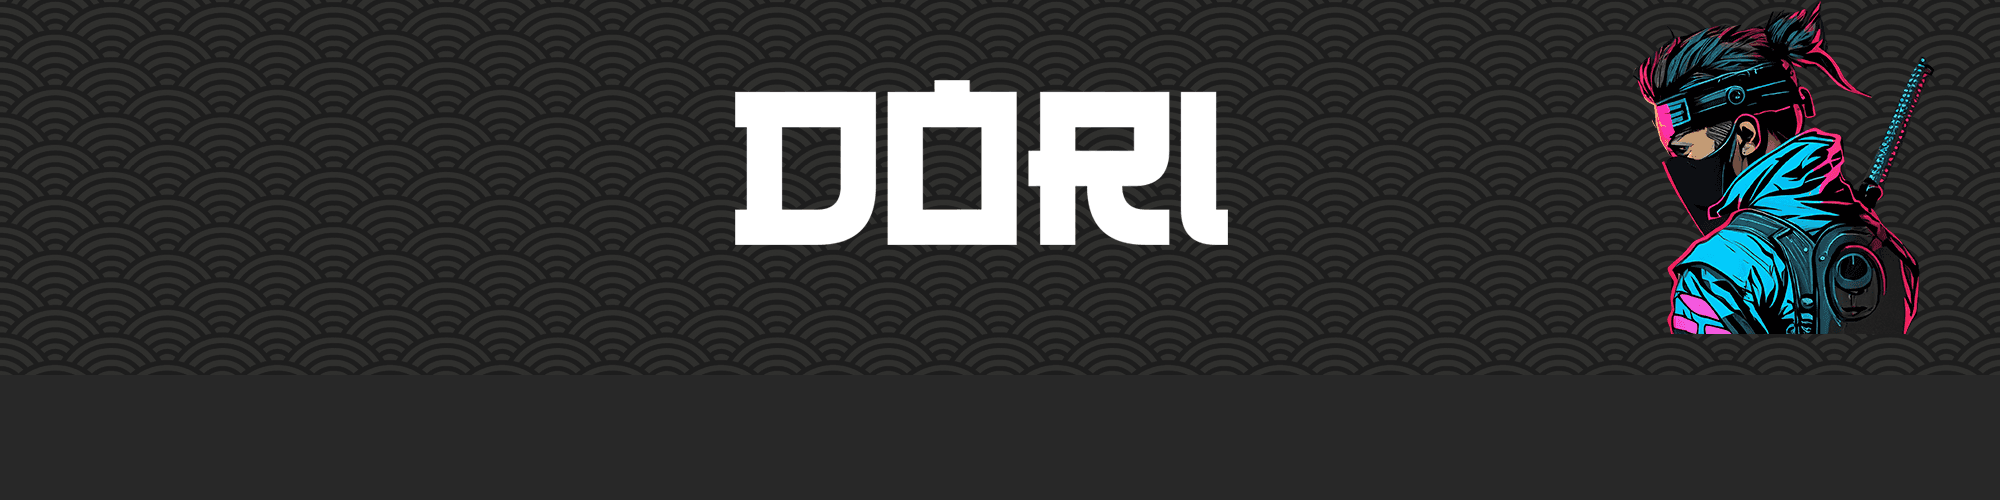 Dori_Deployer 横幅